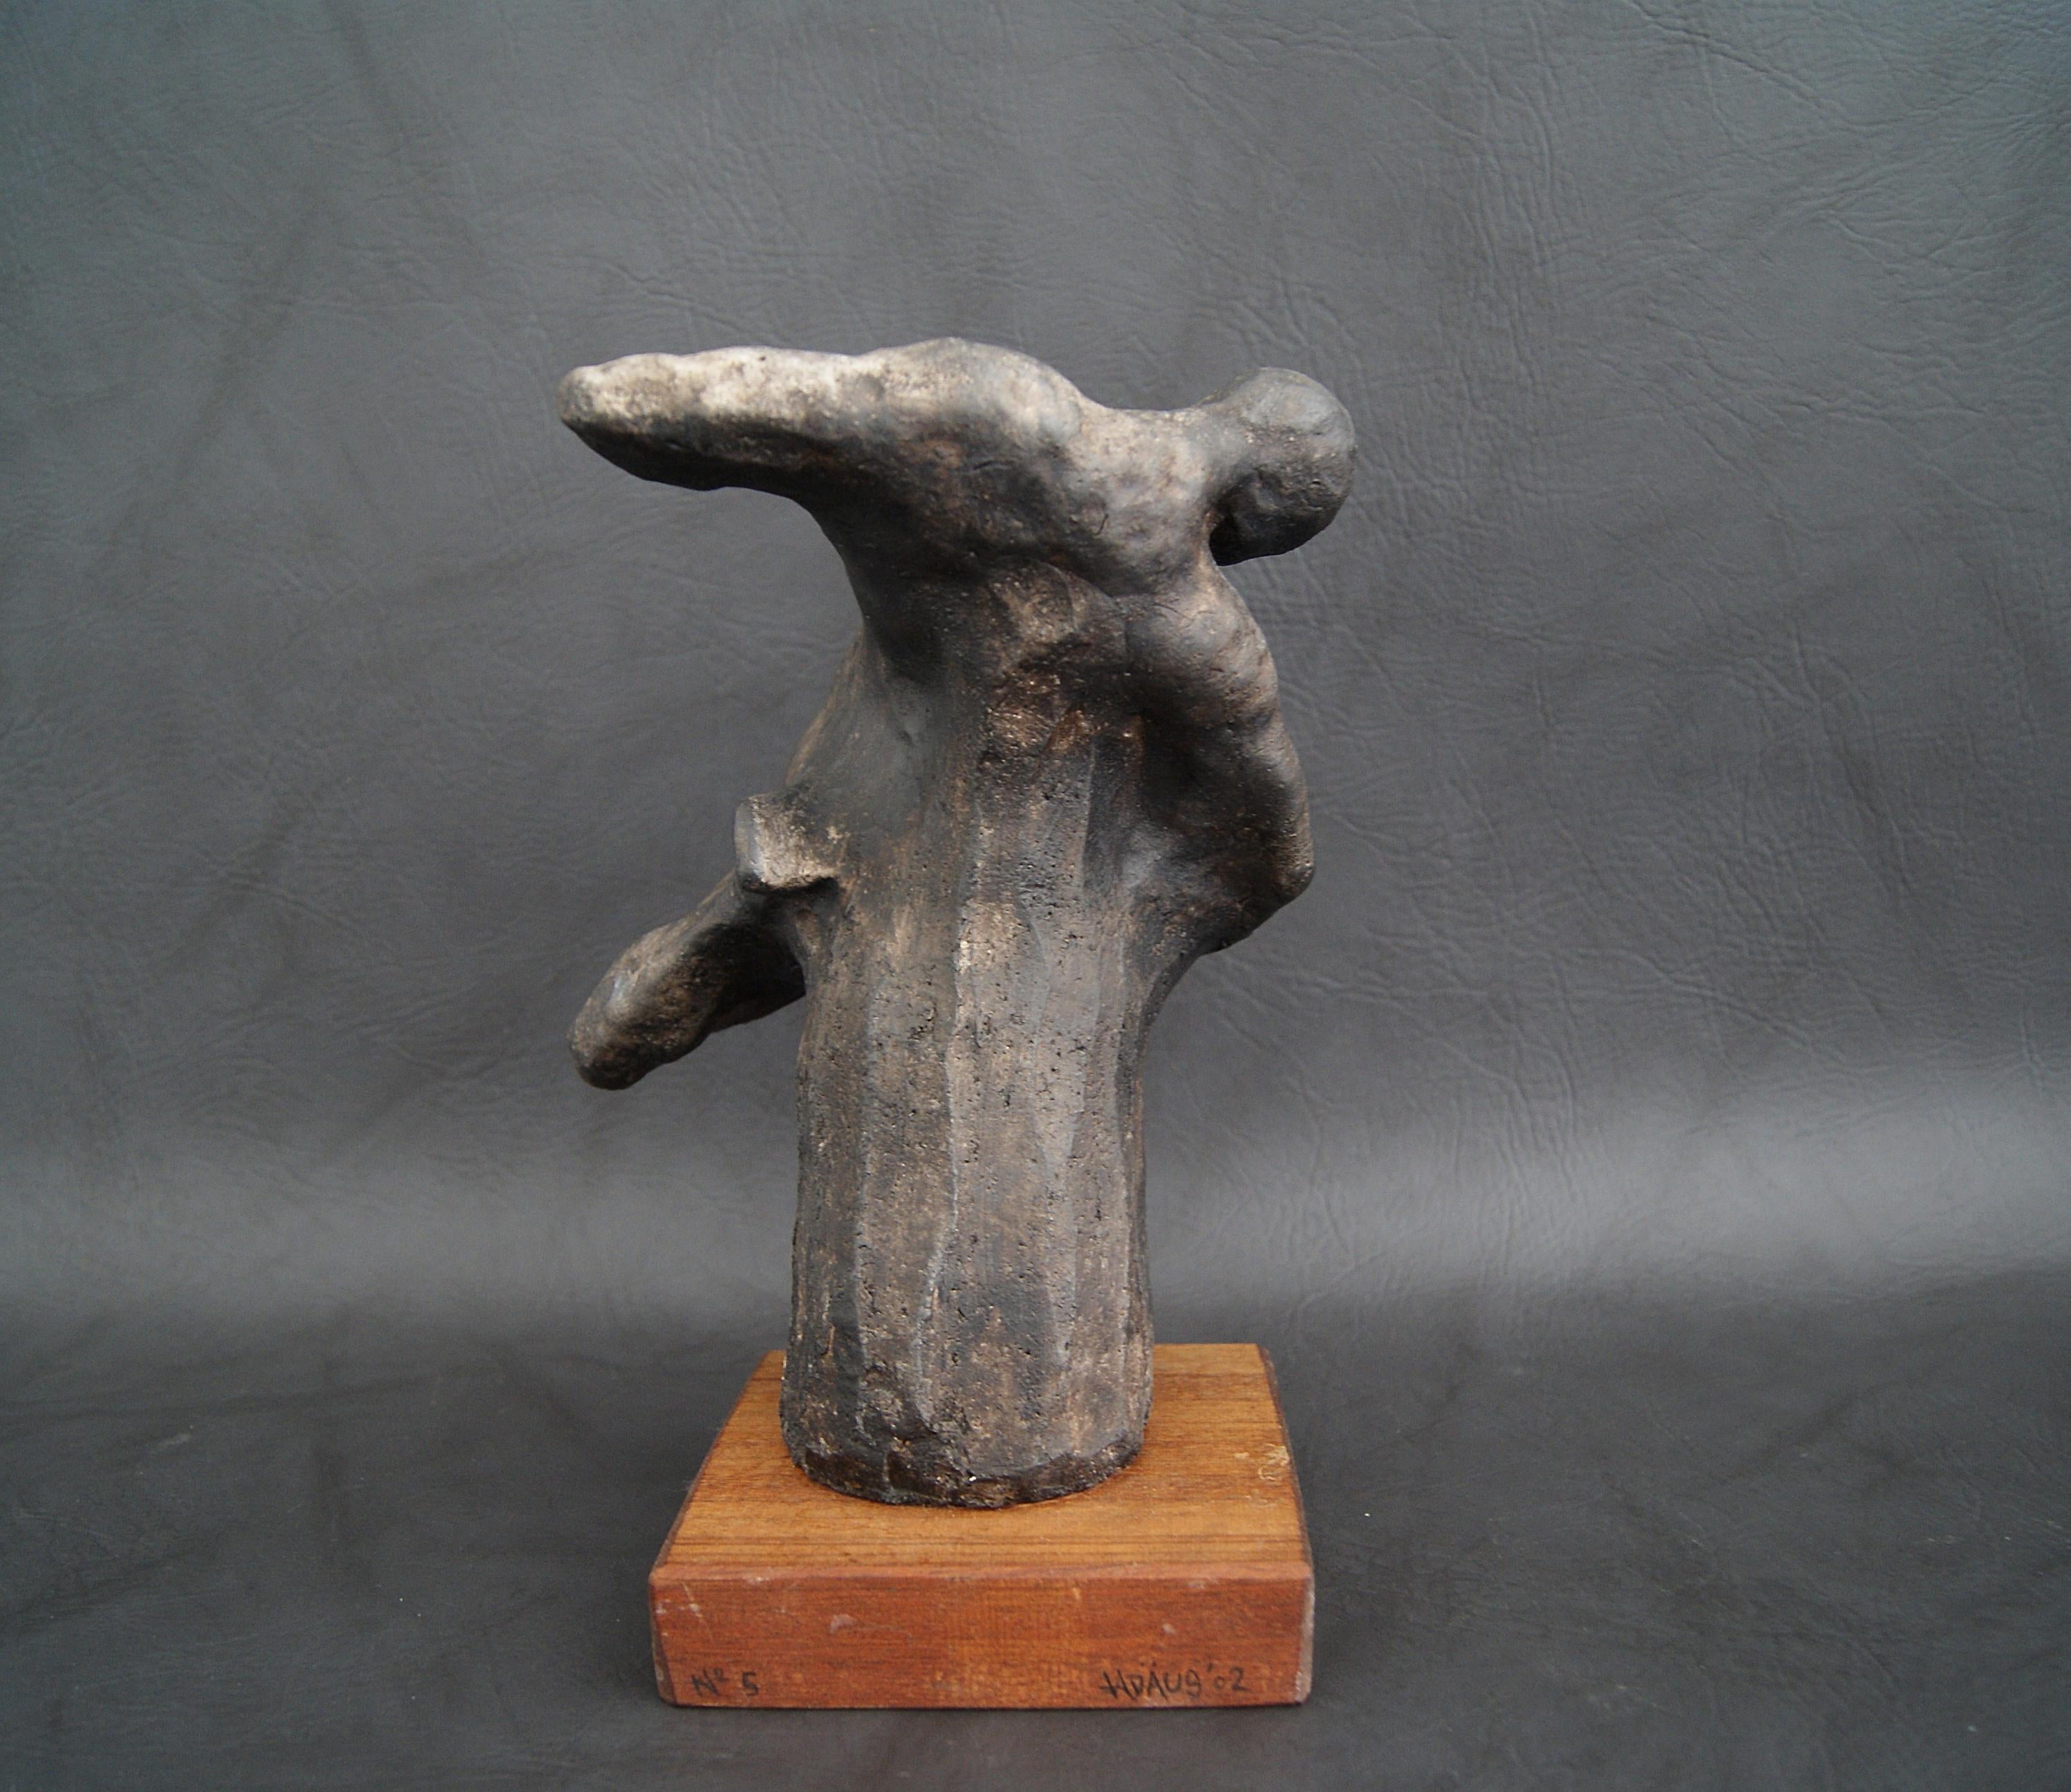 Organic Modern Artist Plaster Sculpture Bronze Patina on a Wooden Base, Abstract Art For Sale